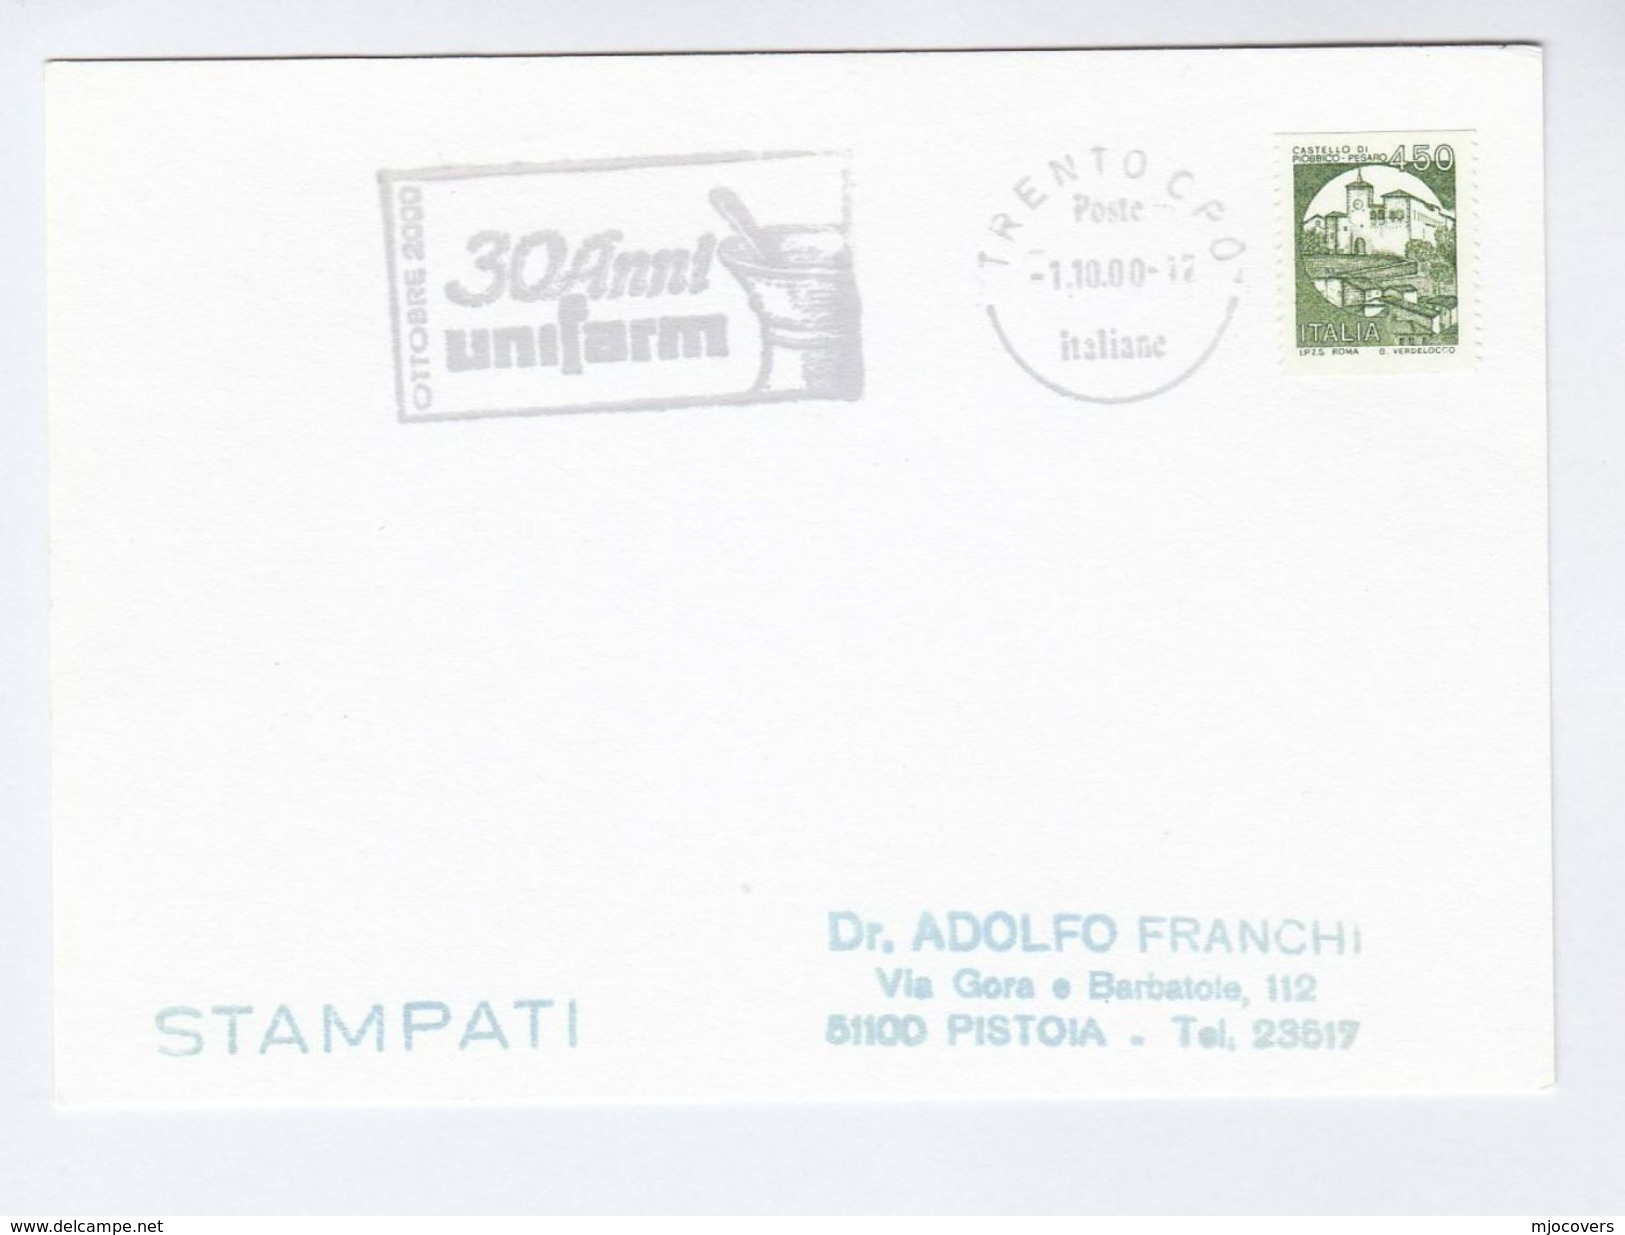 2000 Trento ITALY PHARMACY EVENT COVER  SLOGAN Illus MORTAR PESTLE, UNIFARM 30th ANNIV Medicine Health Stamps - Pharmacy